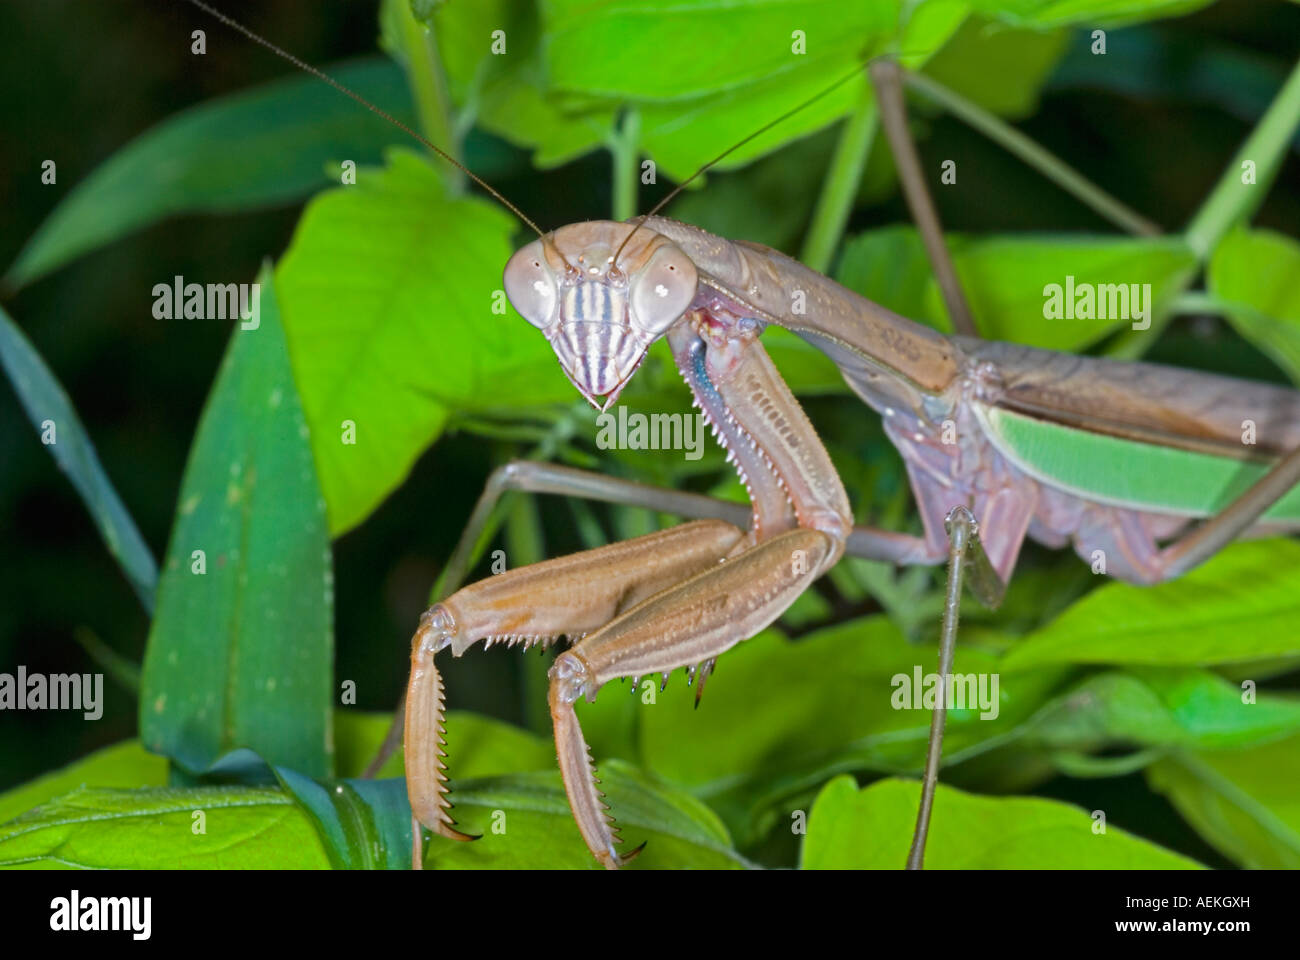 Chinesischer Mantis, Tenodera Aridifolia, Insekt Stockfoto